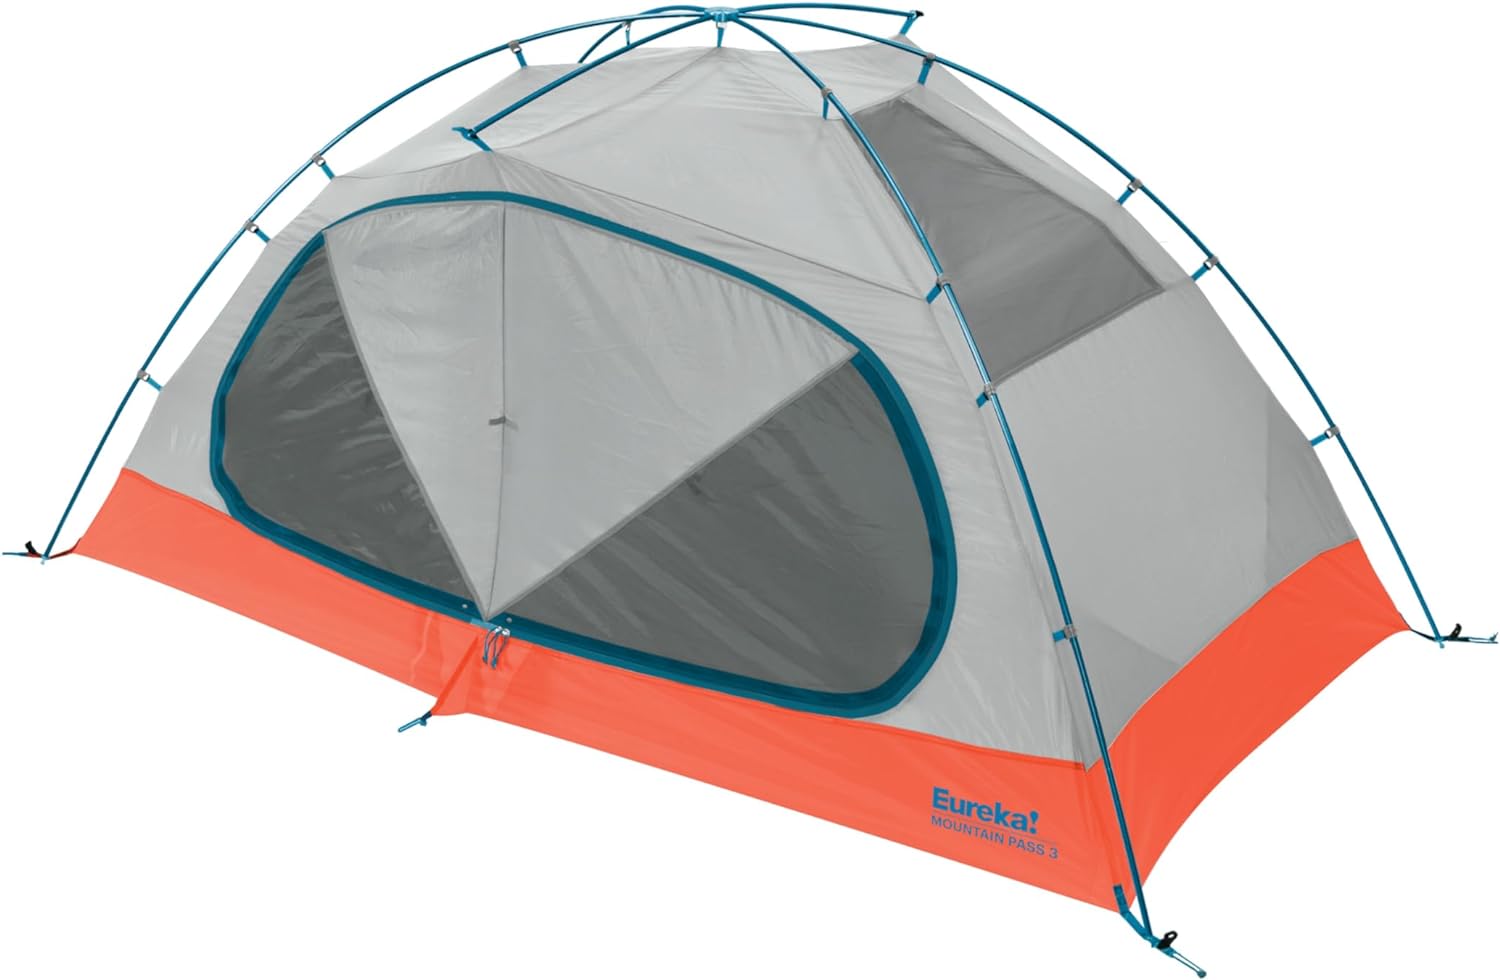 Eureka! Mountain Pass Four-Season Extreme Weather Backpacking Tent